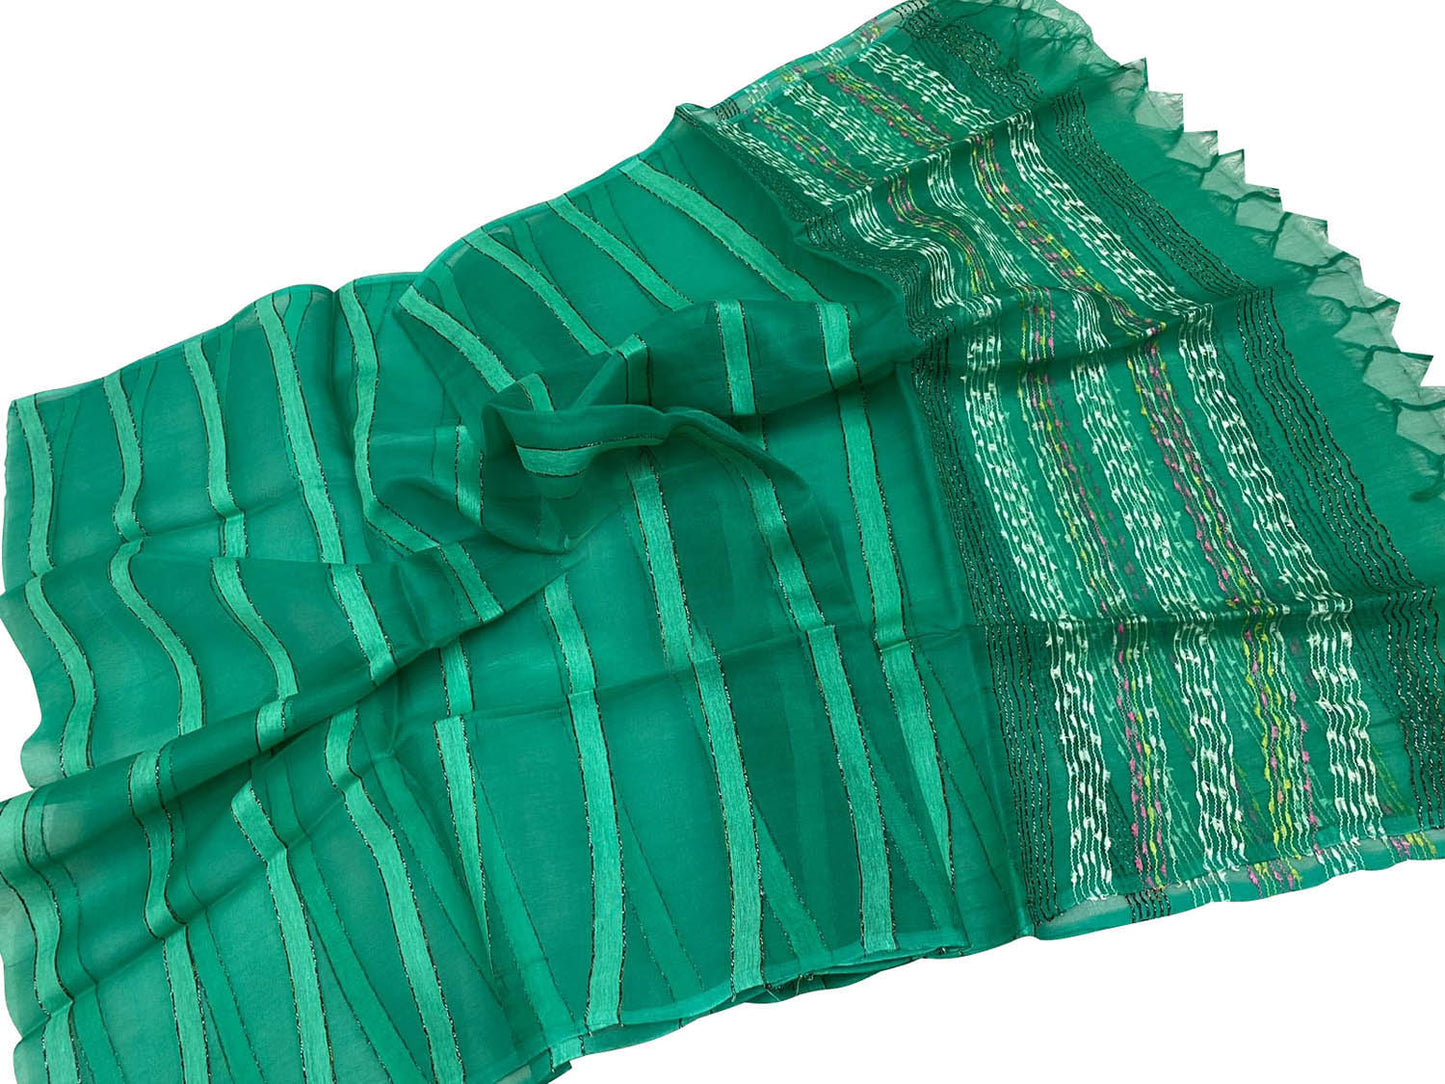 Shop Green Bhagalpur Pure Tussar Silk Dupatta - Premium Quality | Buy Now! - Luxurion World